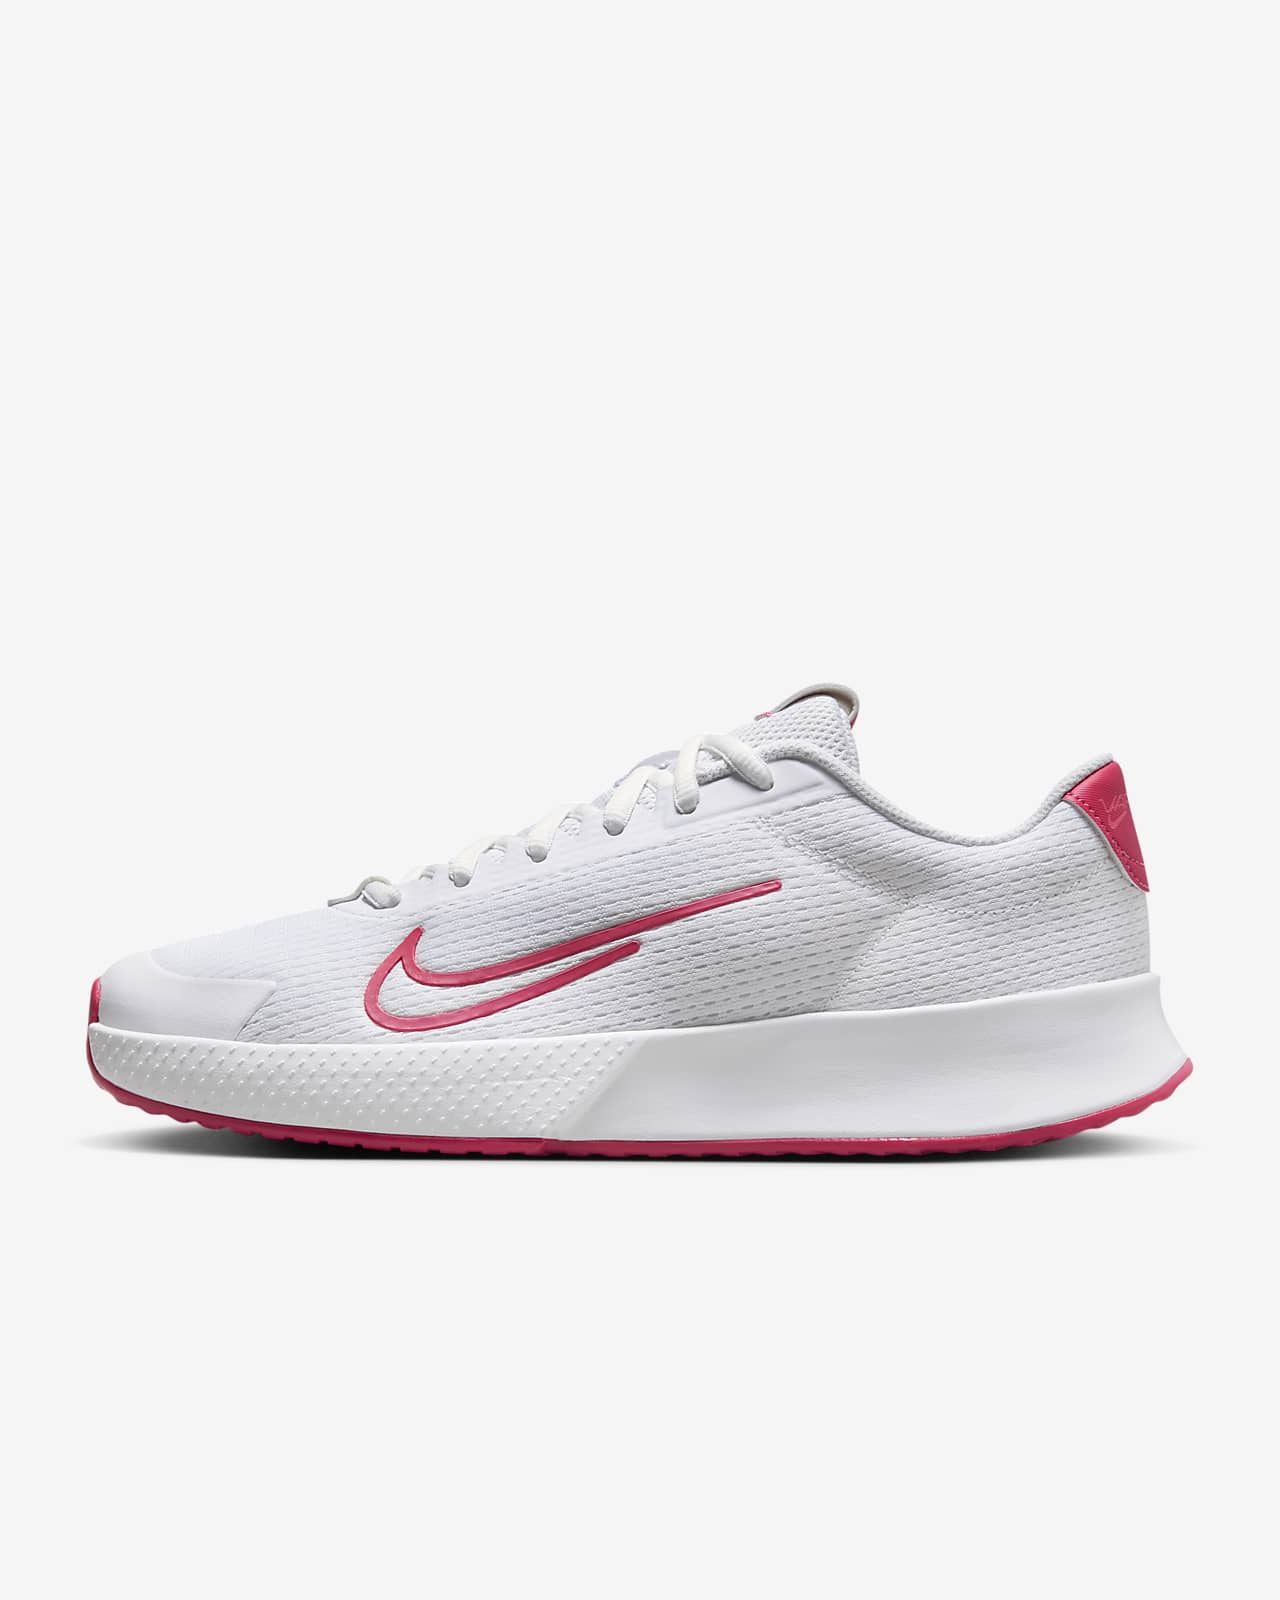 NikeCourt Vapor Lite 2 Women's Hard Court Tennis Shoes